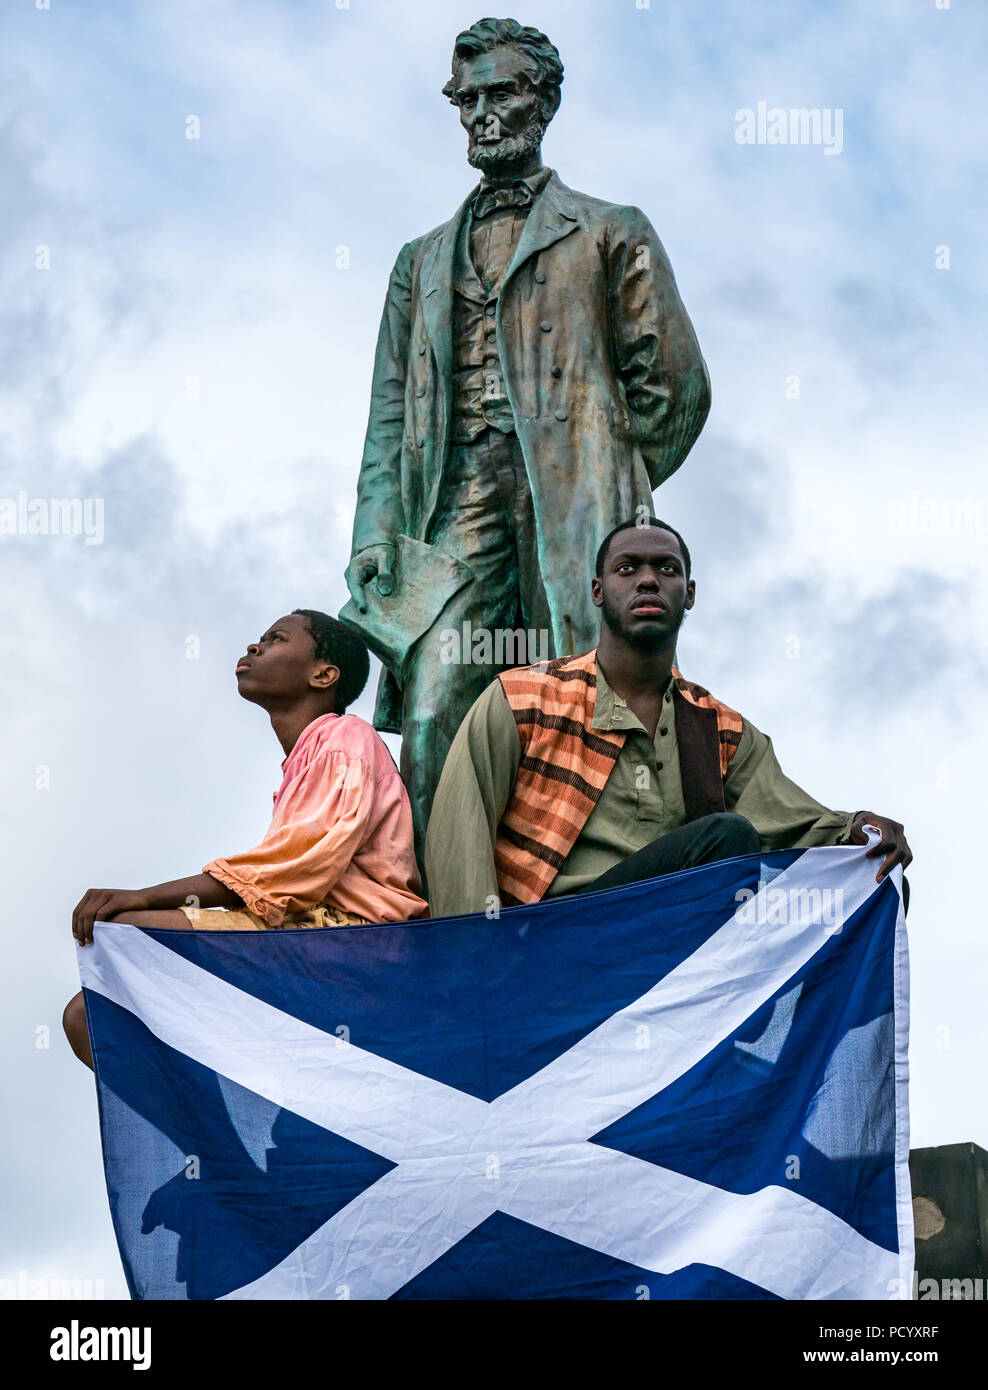 Black American actors & saltire Henry Box Brown Musical, Fringe Festival, Abraham Lincoln Memorial, Old Calton Burial Ground,  Edinburgh, Scotland, UK Stock Photo